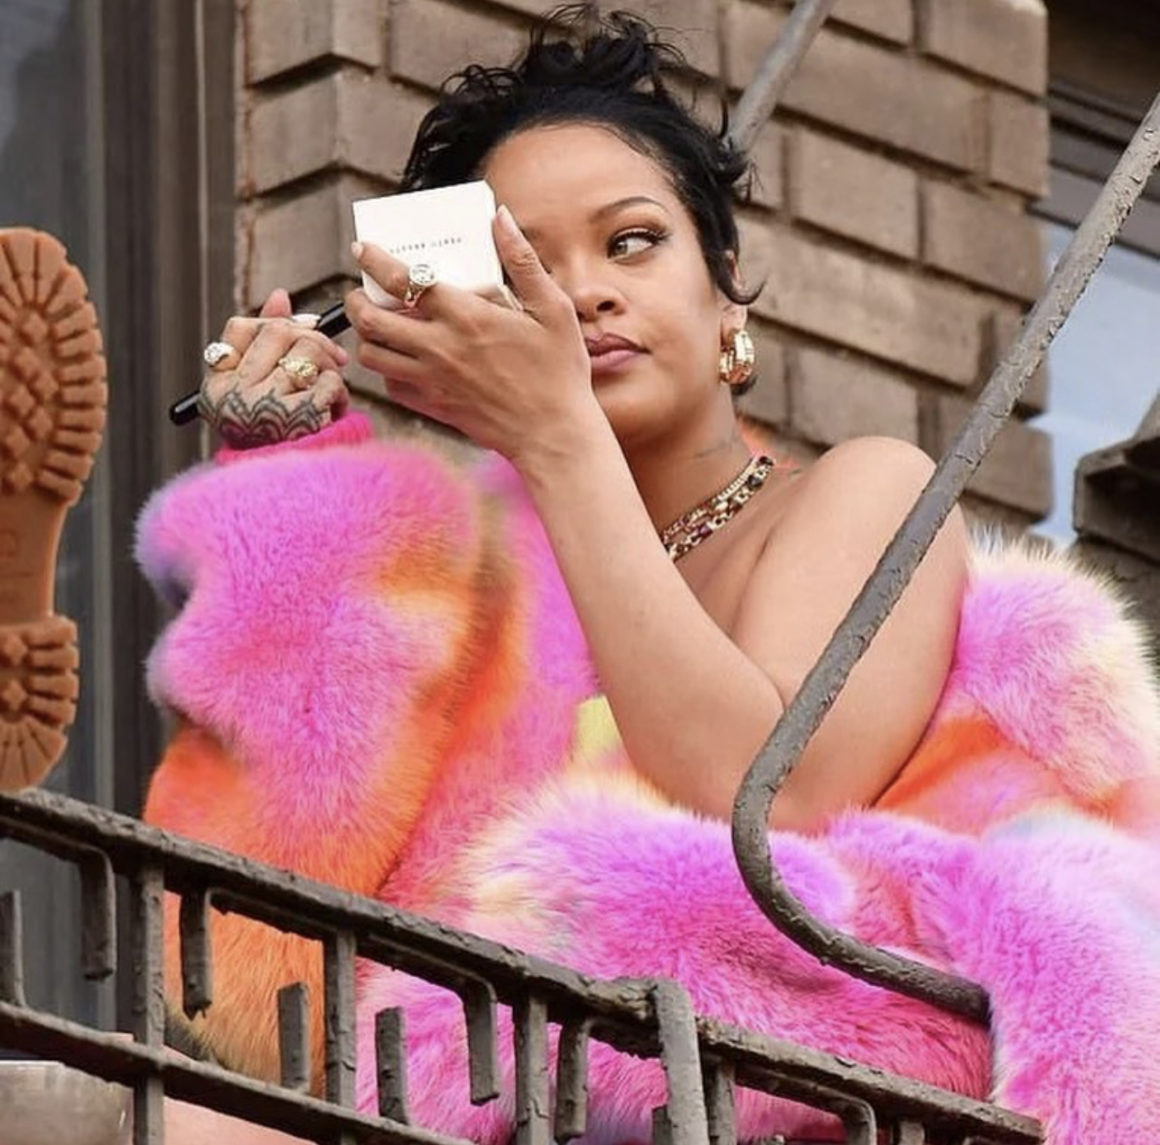 Rihanna Wore a Brand New Designer for Latest Music Video: Photo 3690261, Rihanna Photos